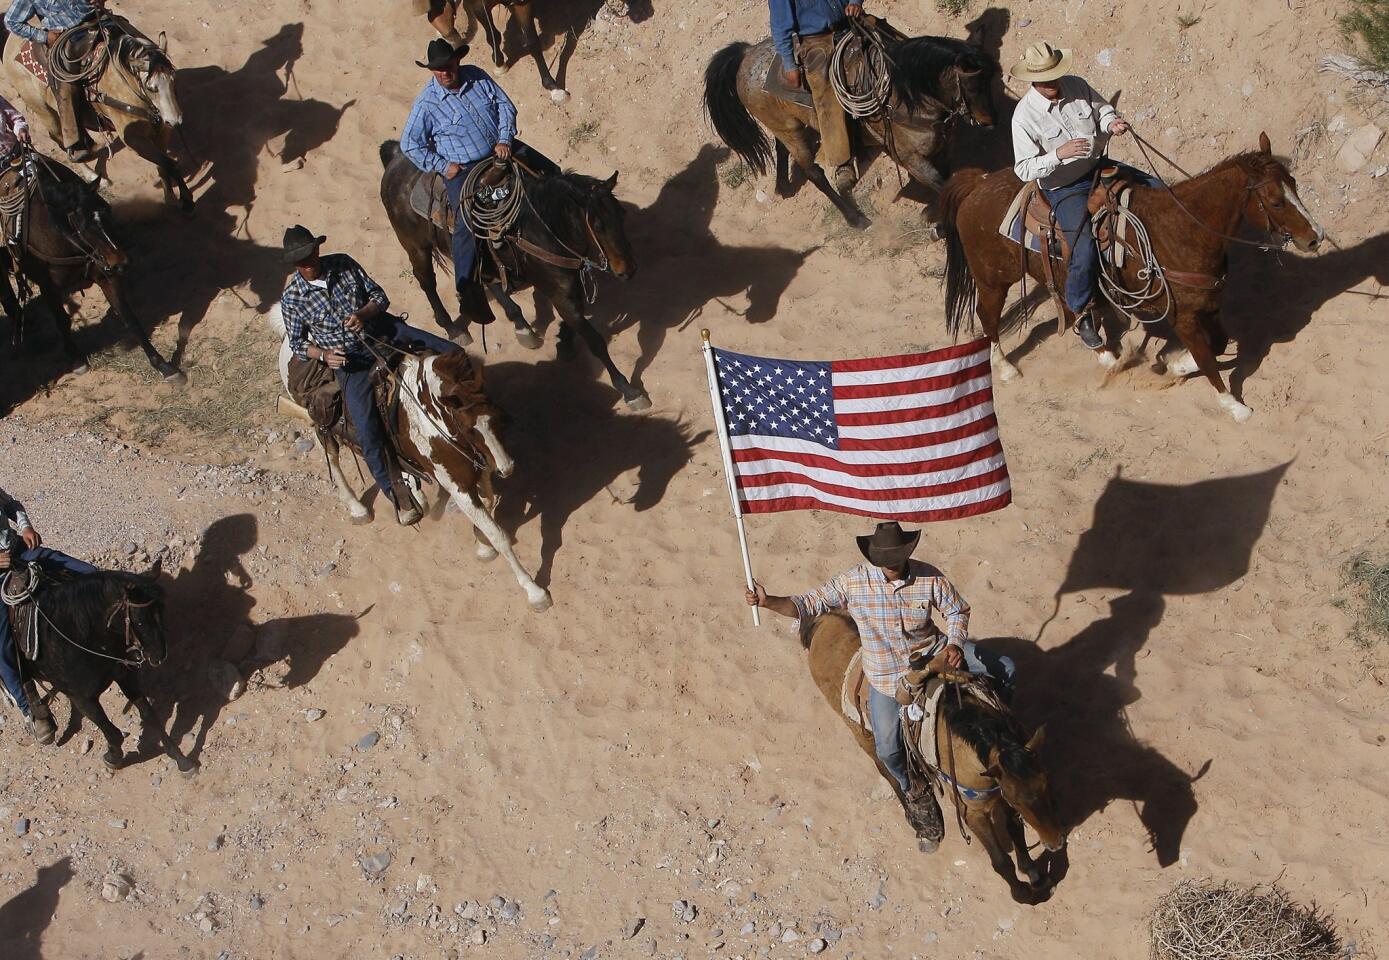 Nevada ranch standoff